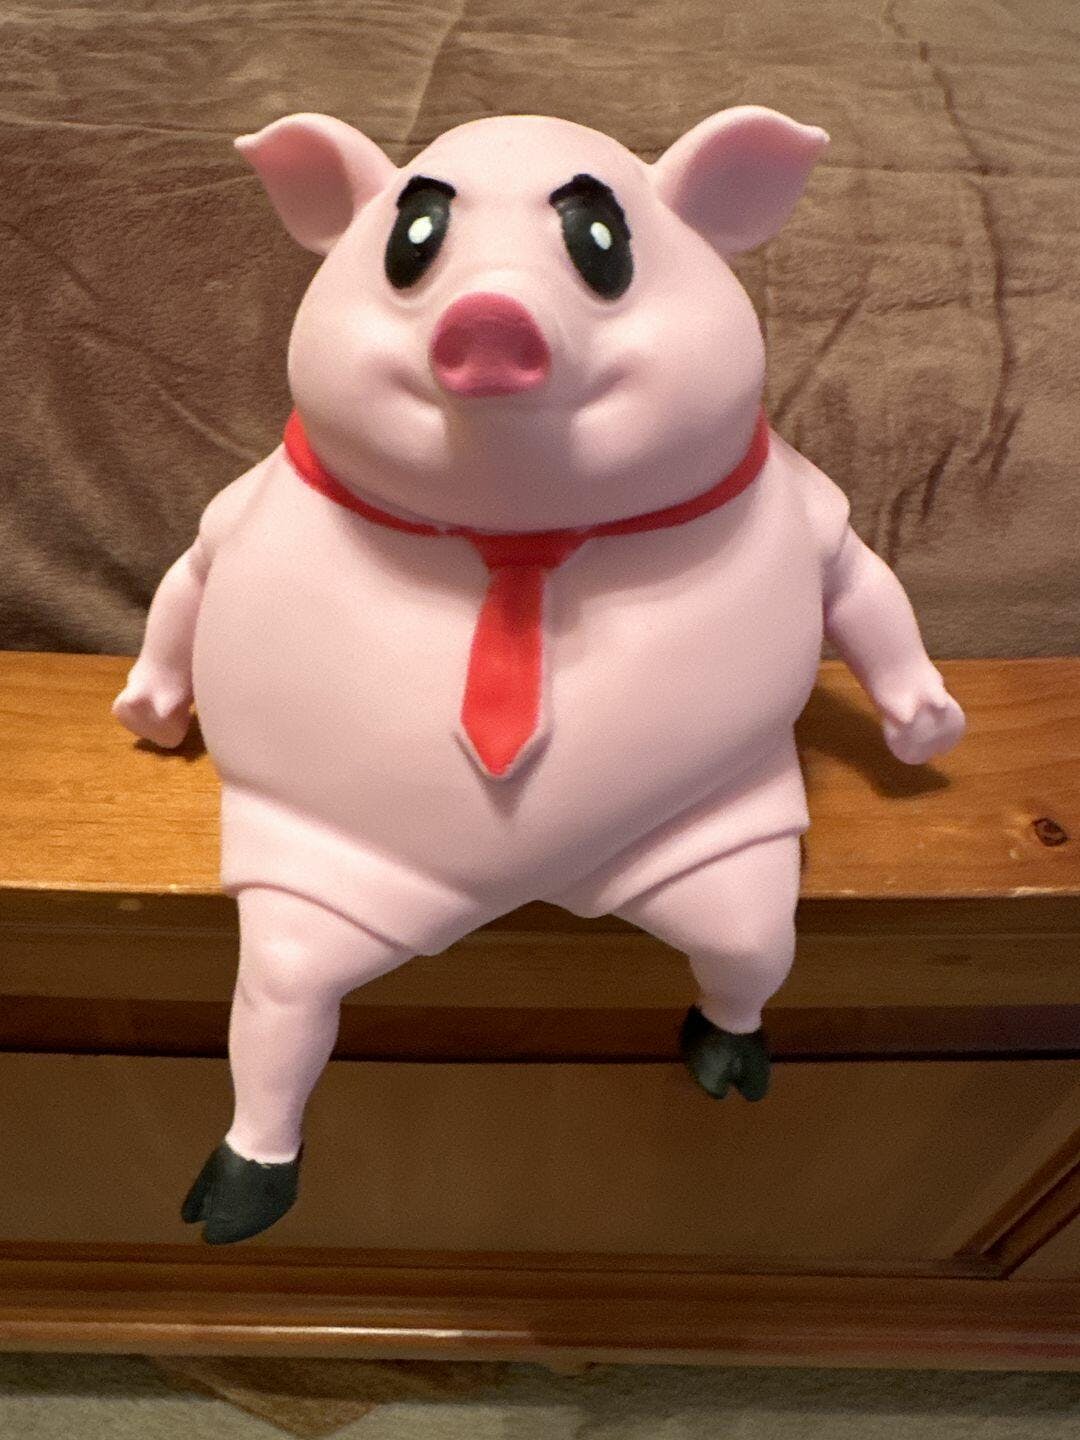 TravelTopp™ Squishy Piggy